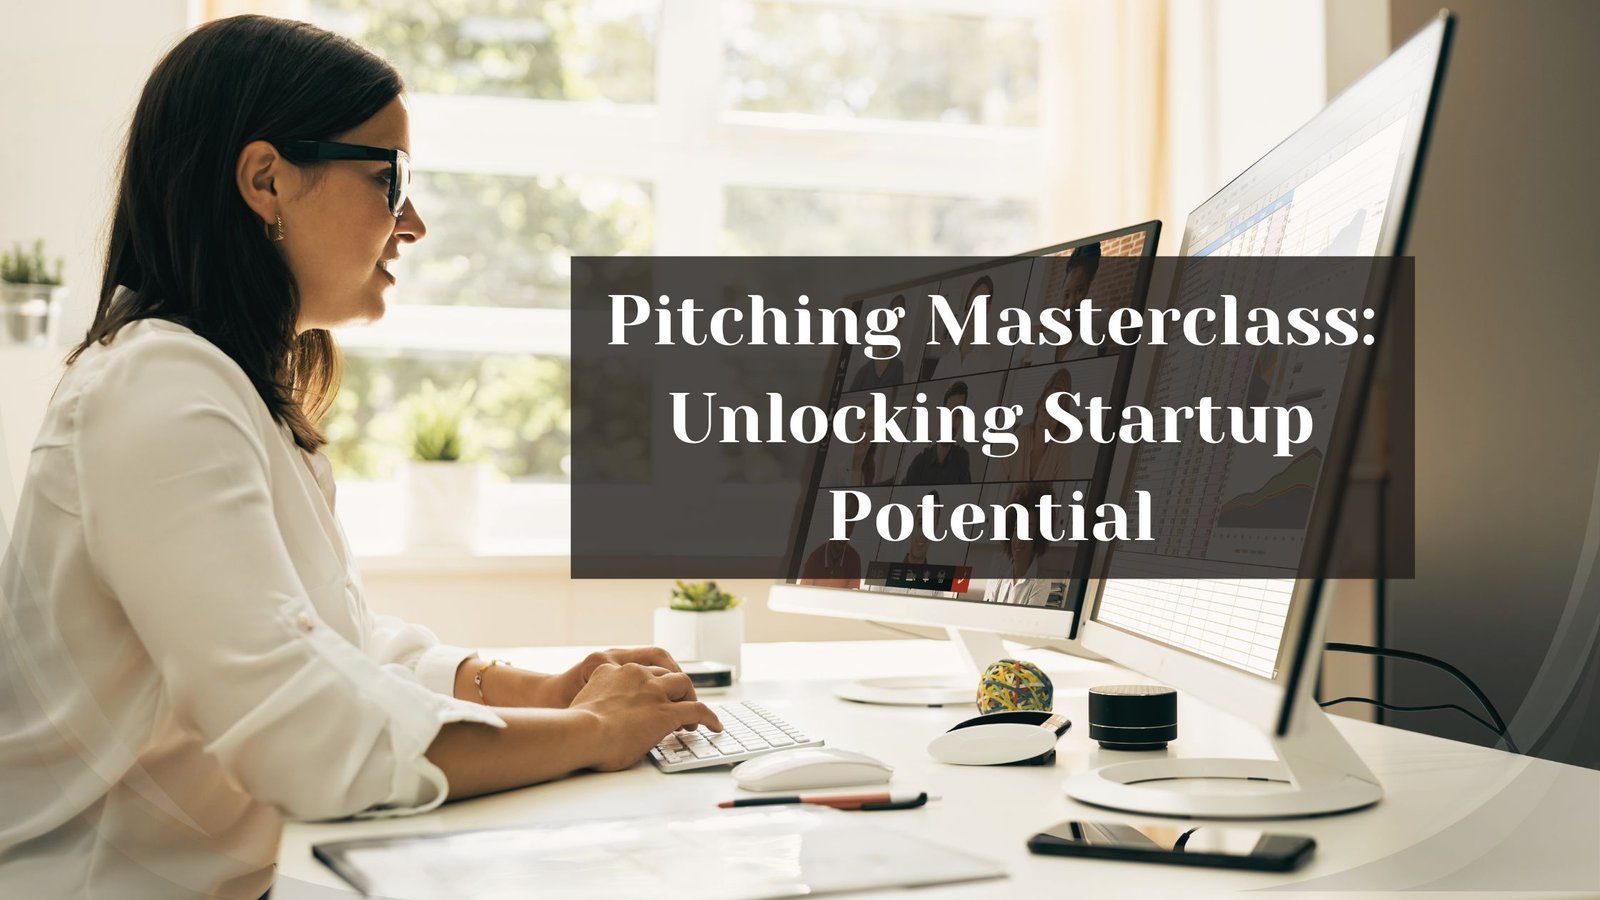 Pitching Masterclass: Unlocking Startup Potential